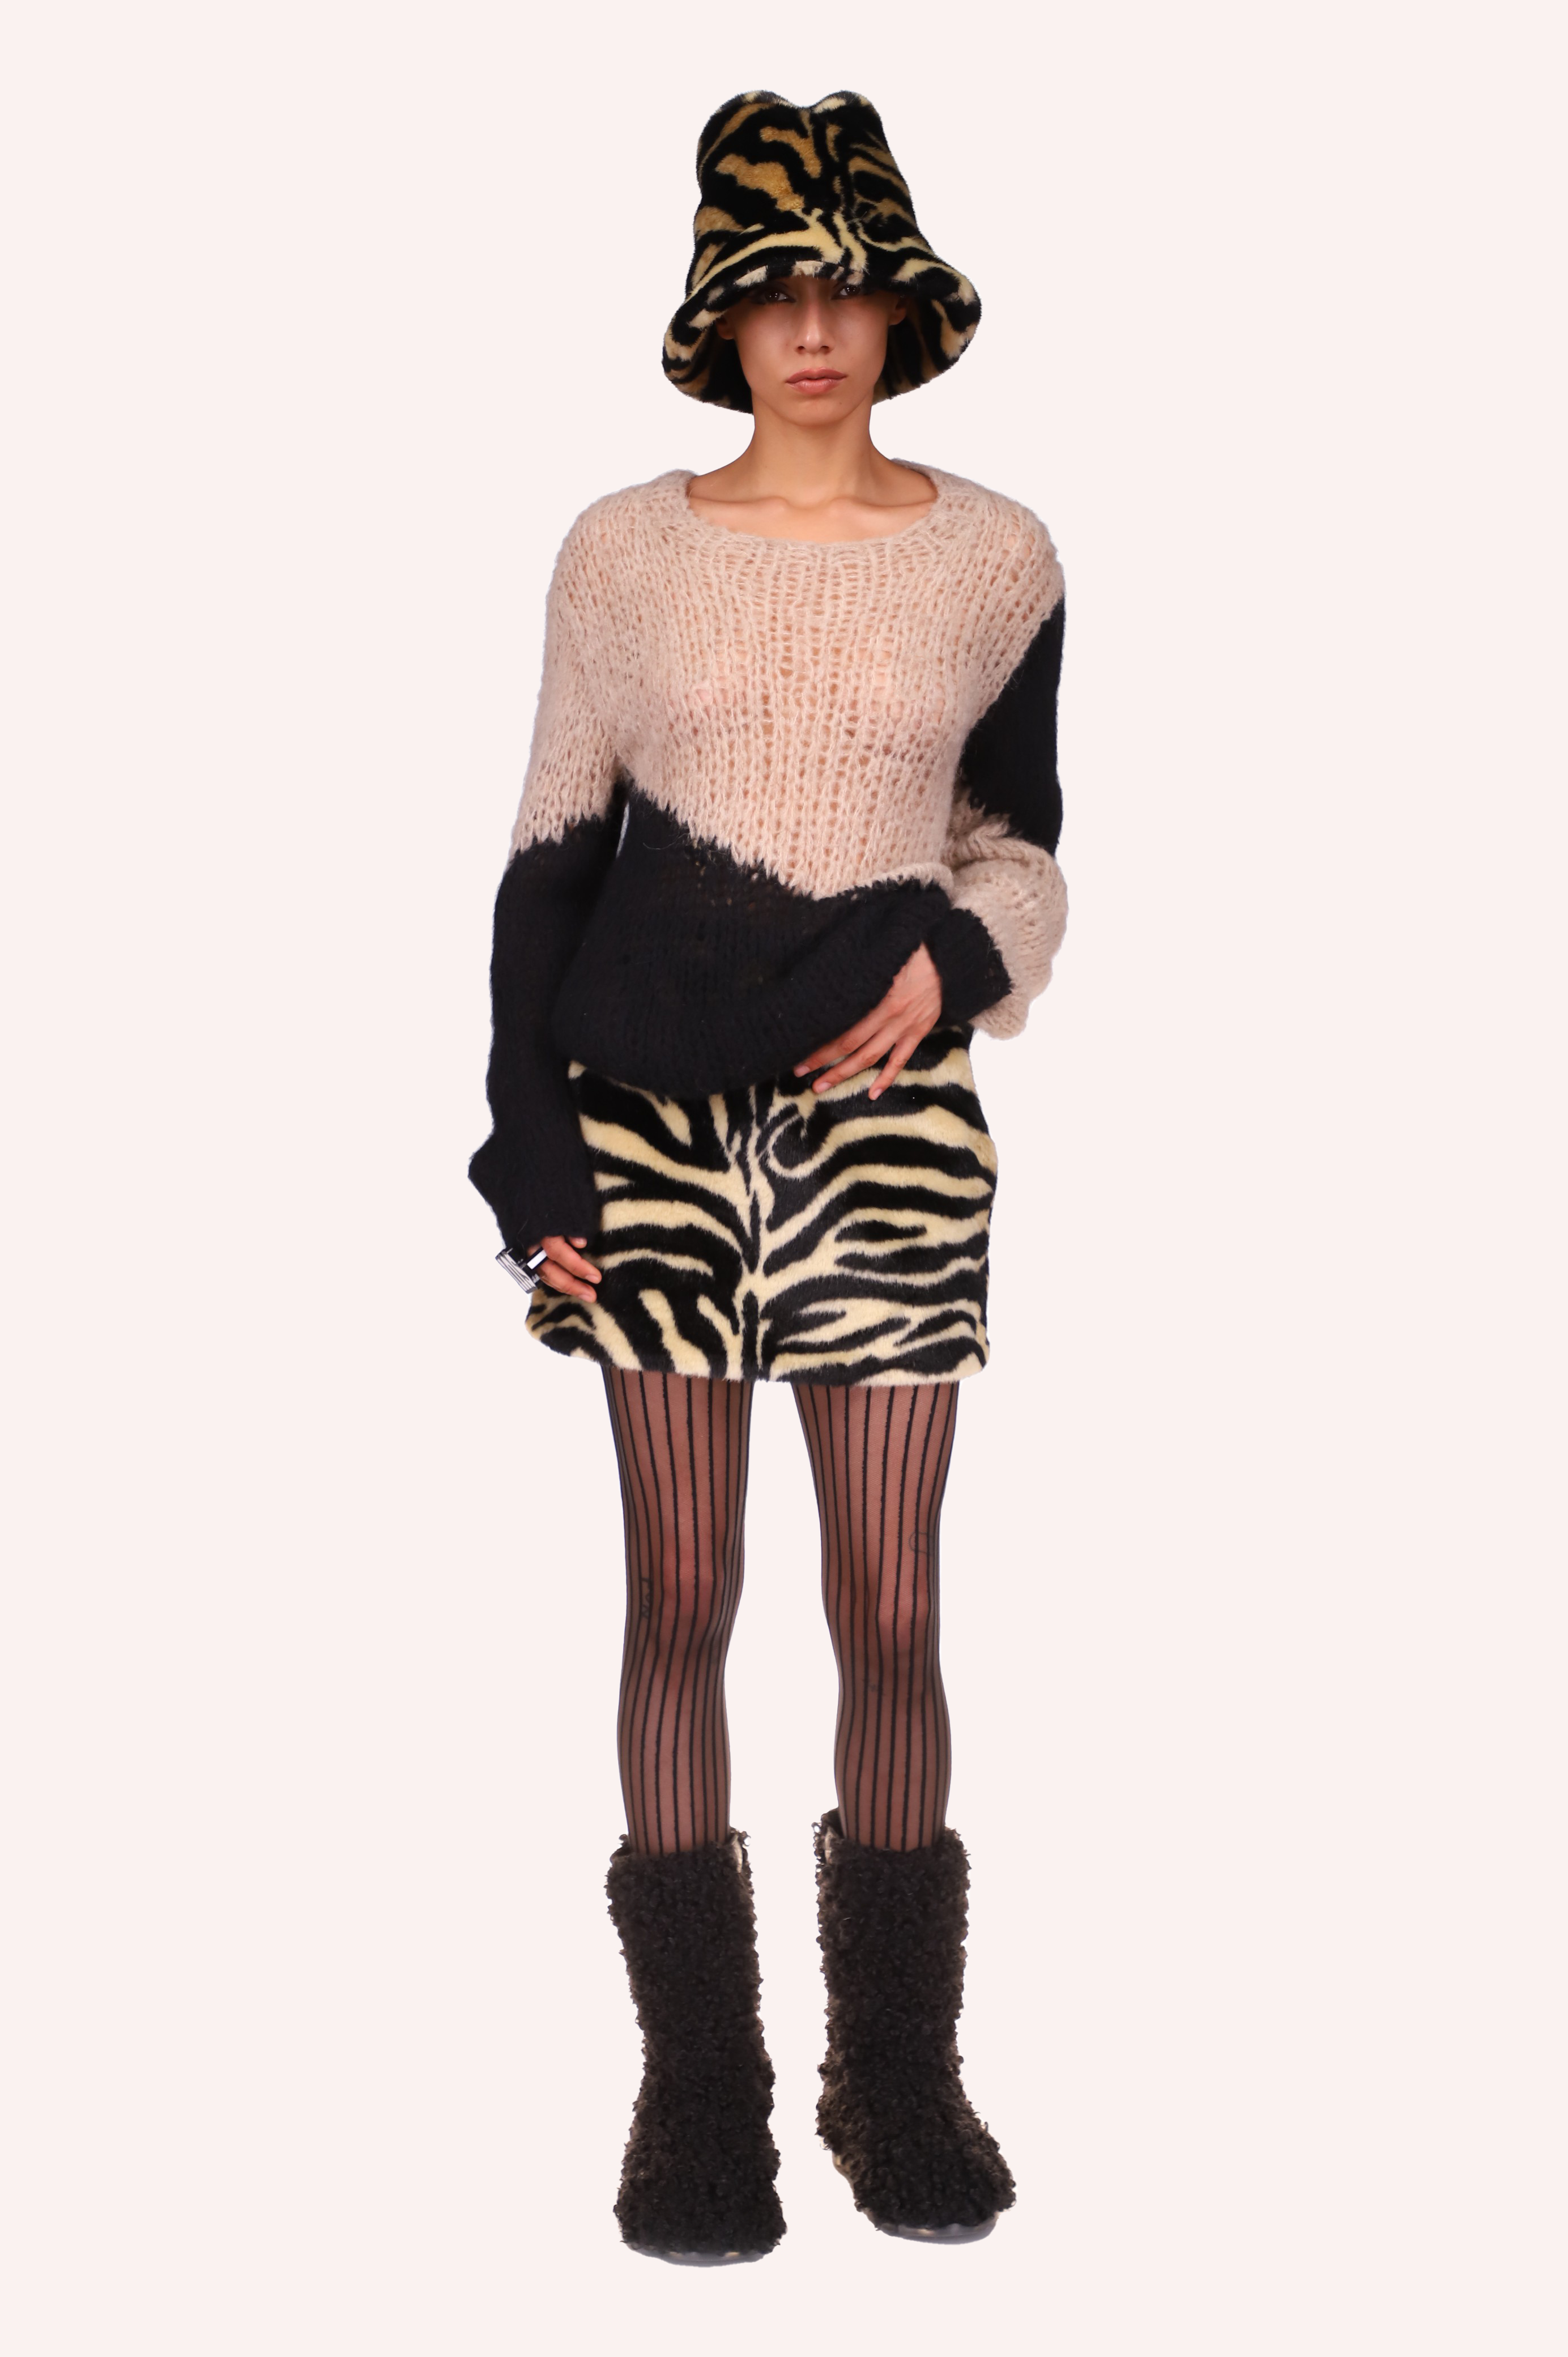 Nuwave Sweater<br> Black/White - Anna Sui